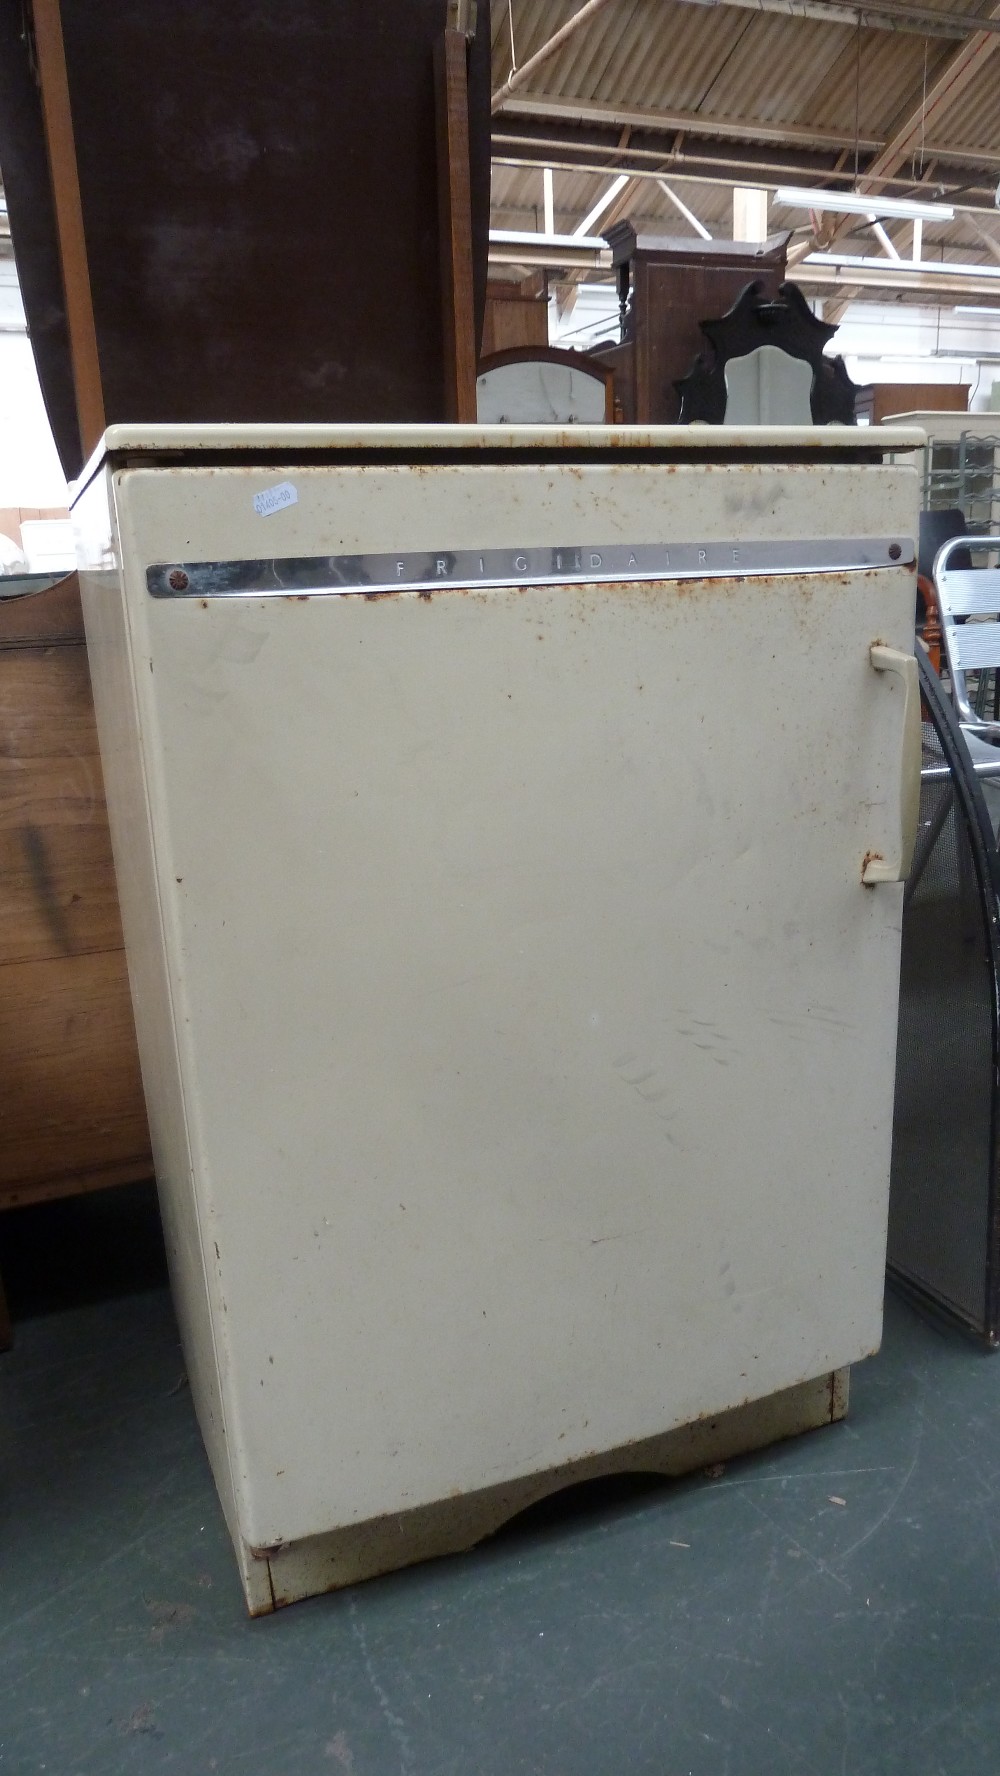 A vintage Frigid Aire fridge, - Image 2 of 2